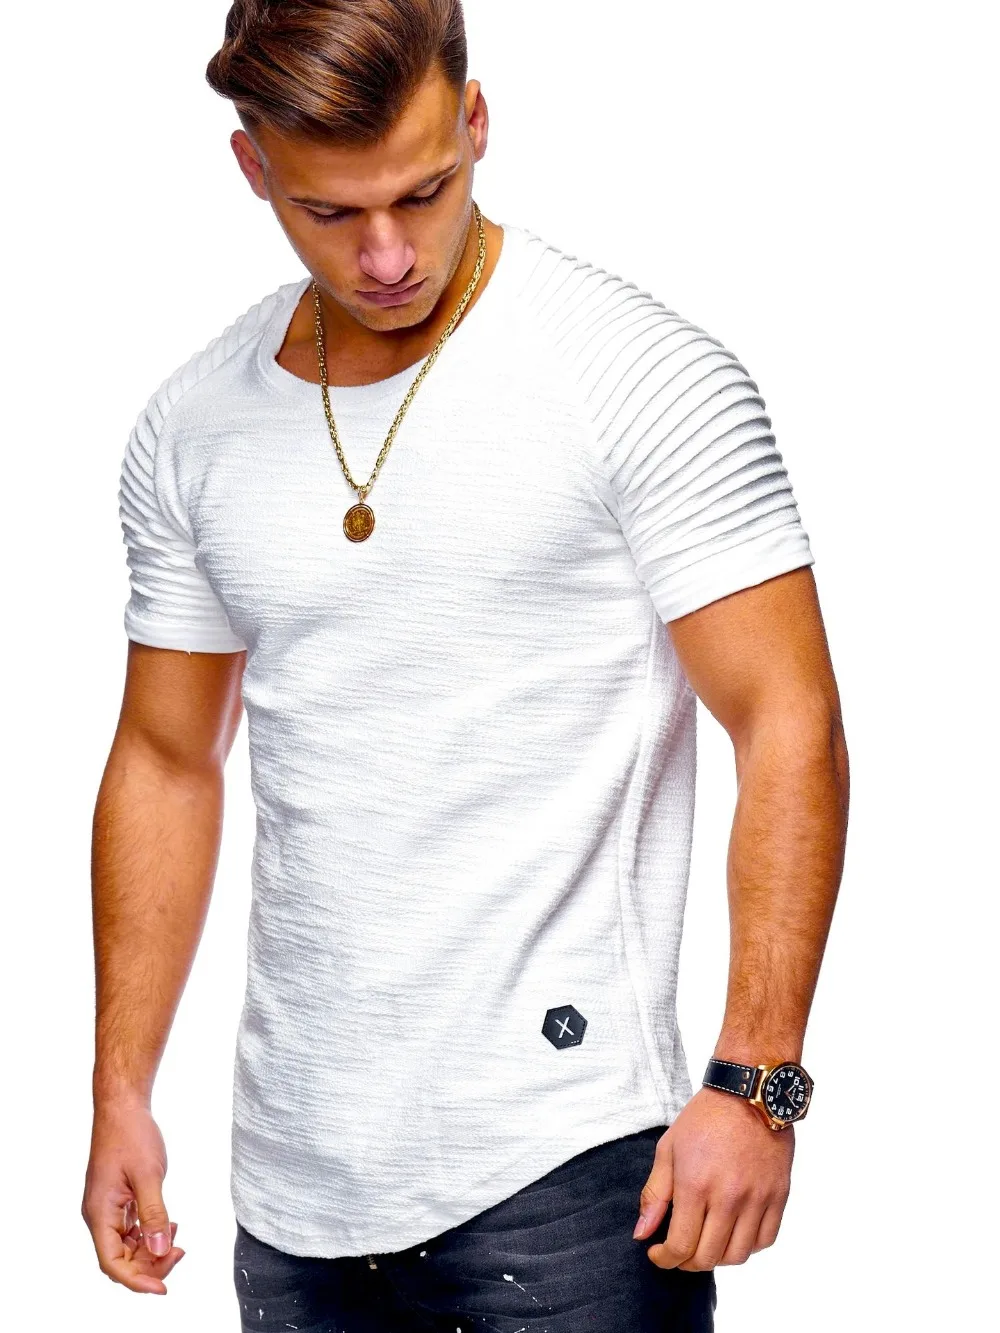 

5628-R-T-shirt men's short-sleeved summer 2019 new half-sleeved shirt round neck loose casual bottoming shirt